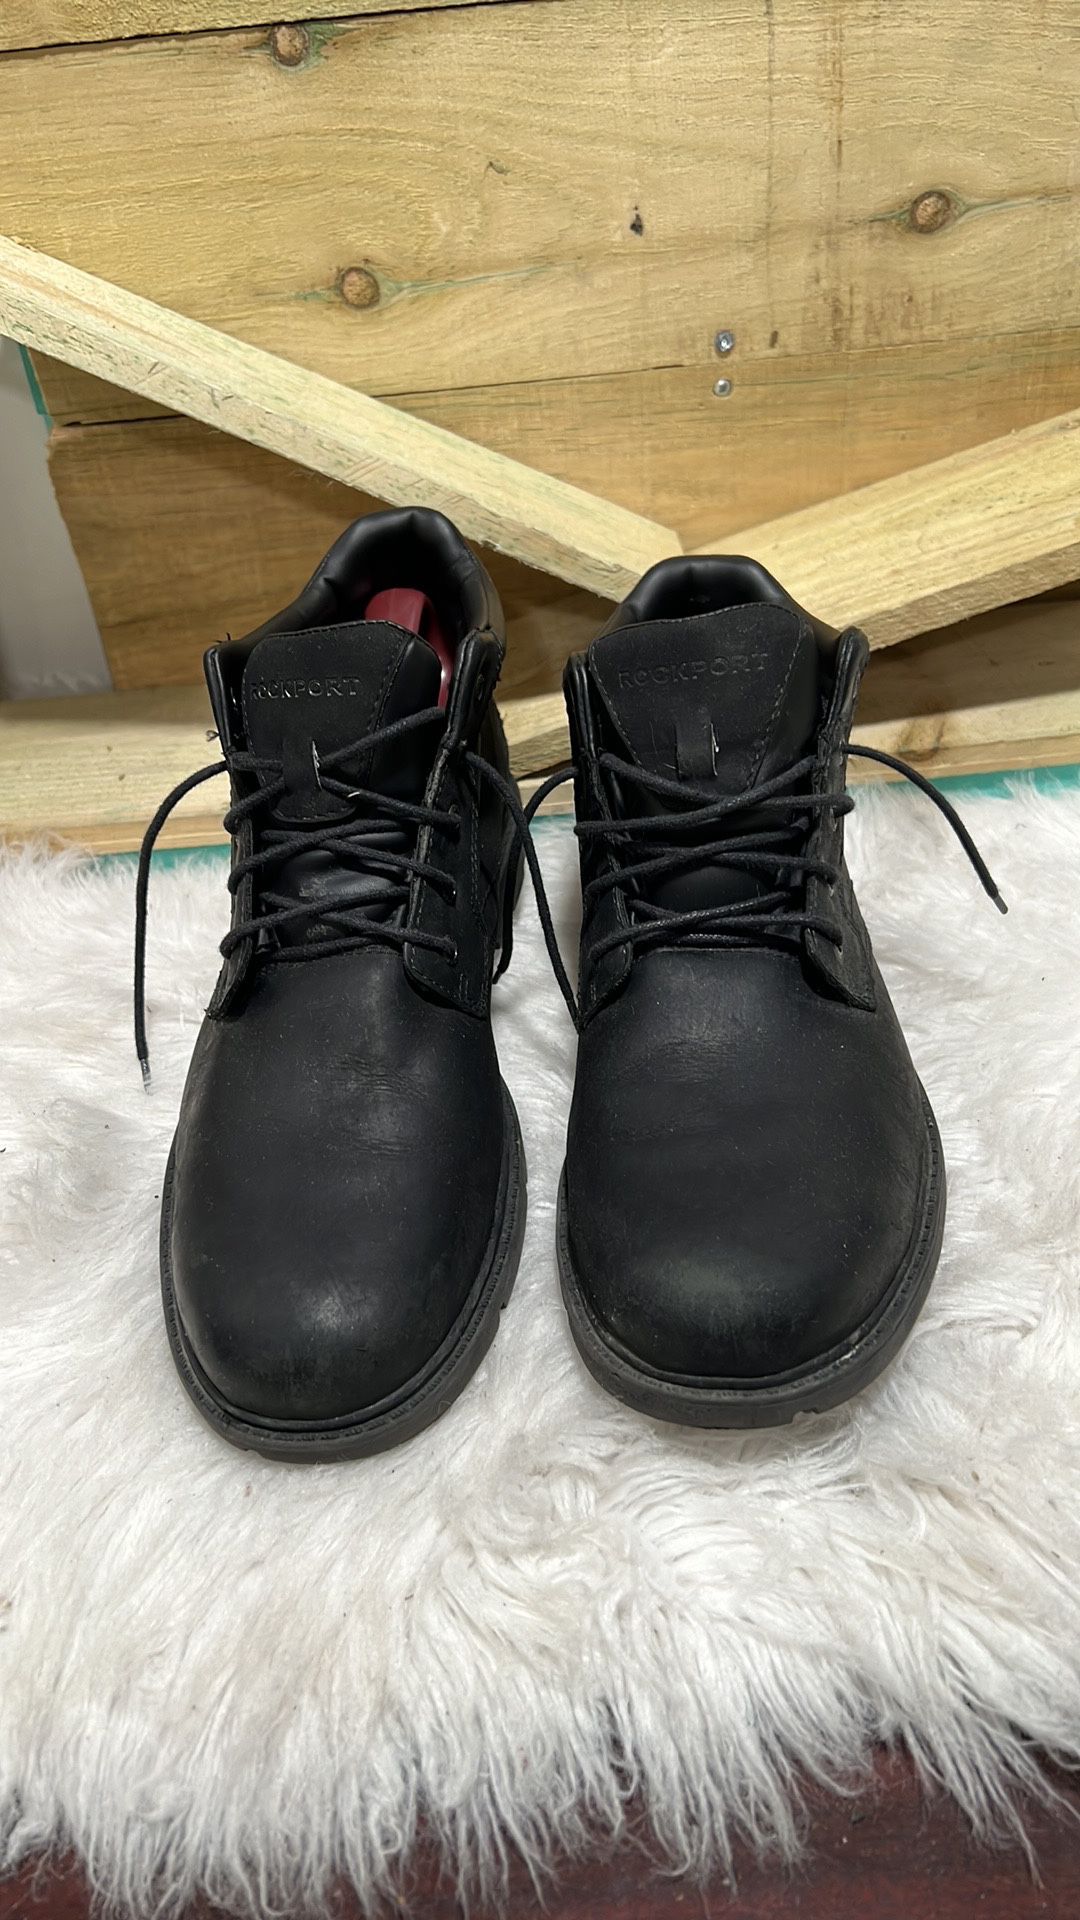 Rockport Rugged Bucks Waterproof Boots, Black, Men's 10 M 